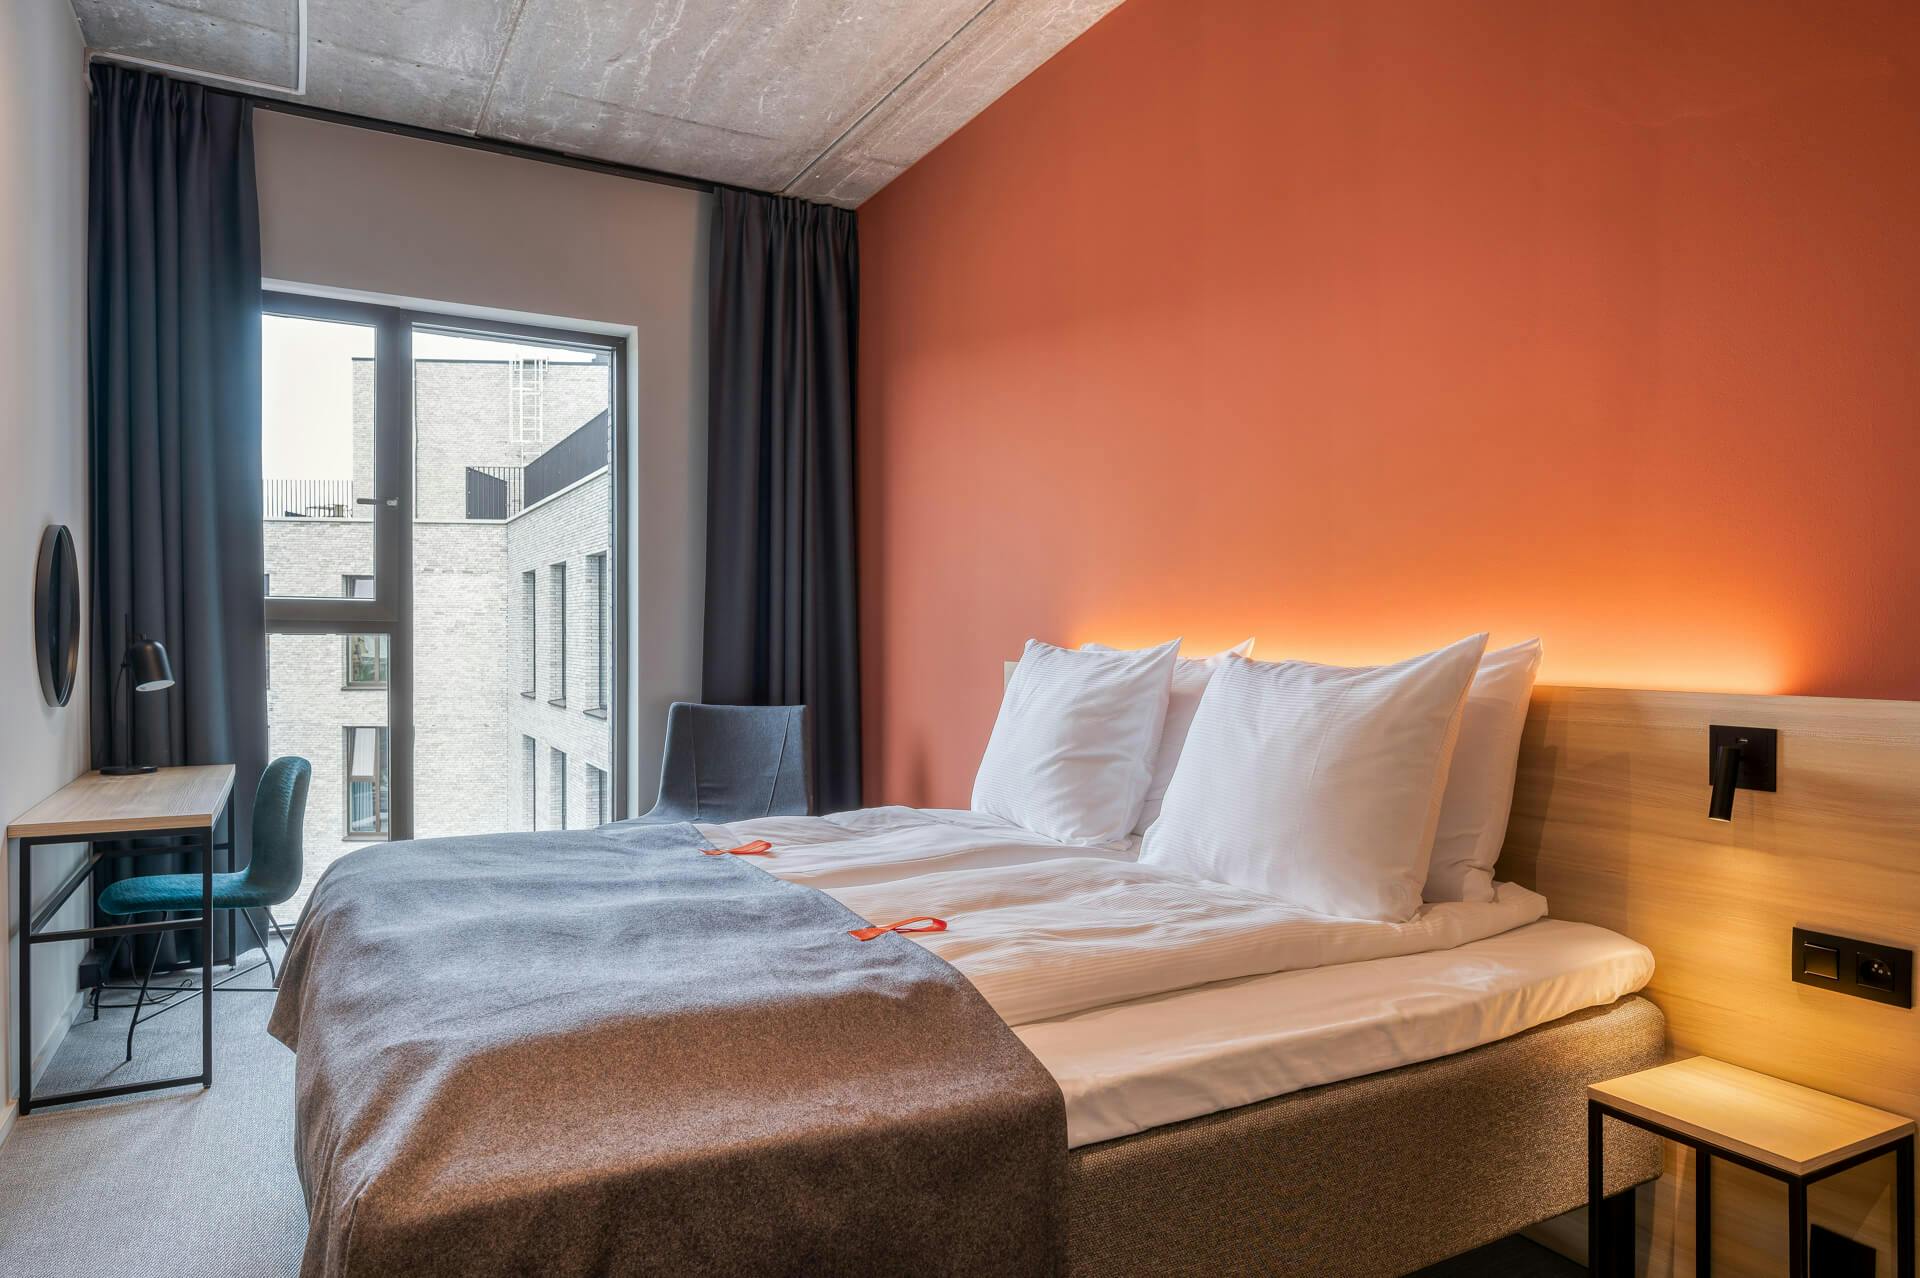 Double bed, big window, orange wall, desk, chair